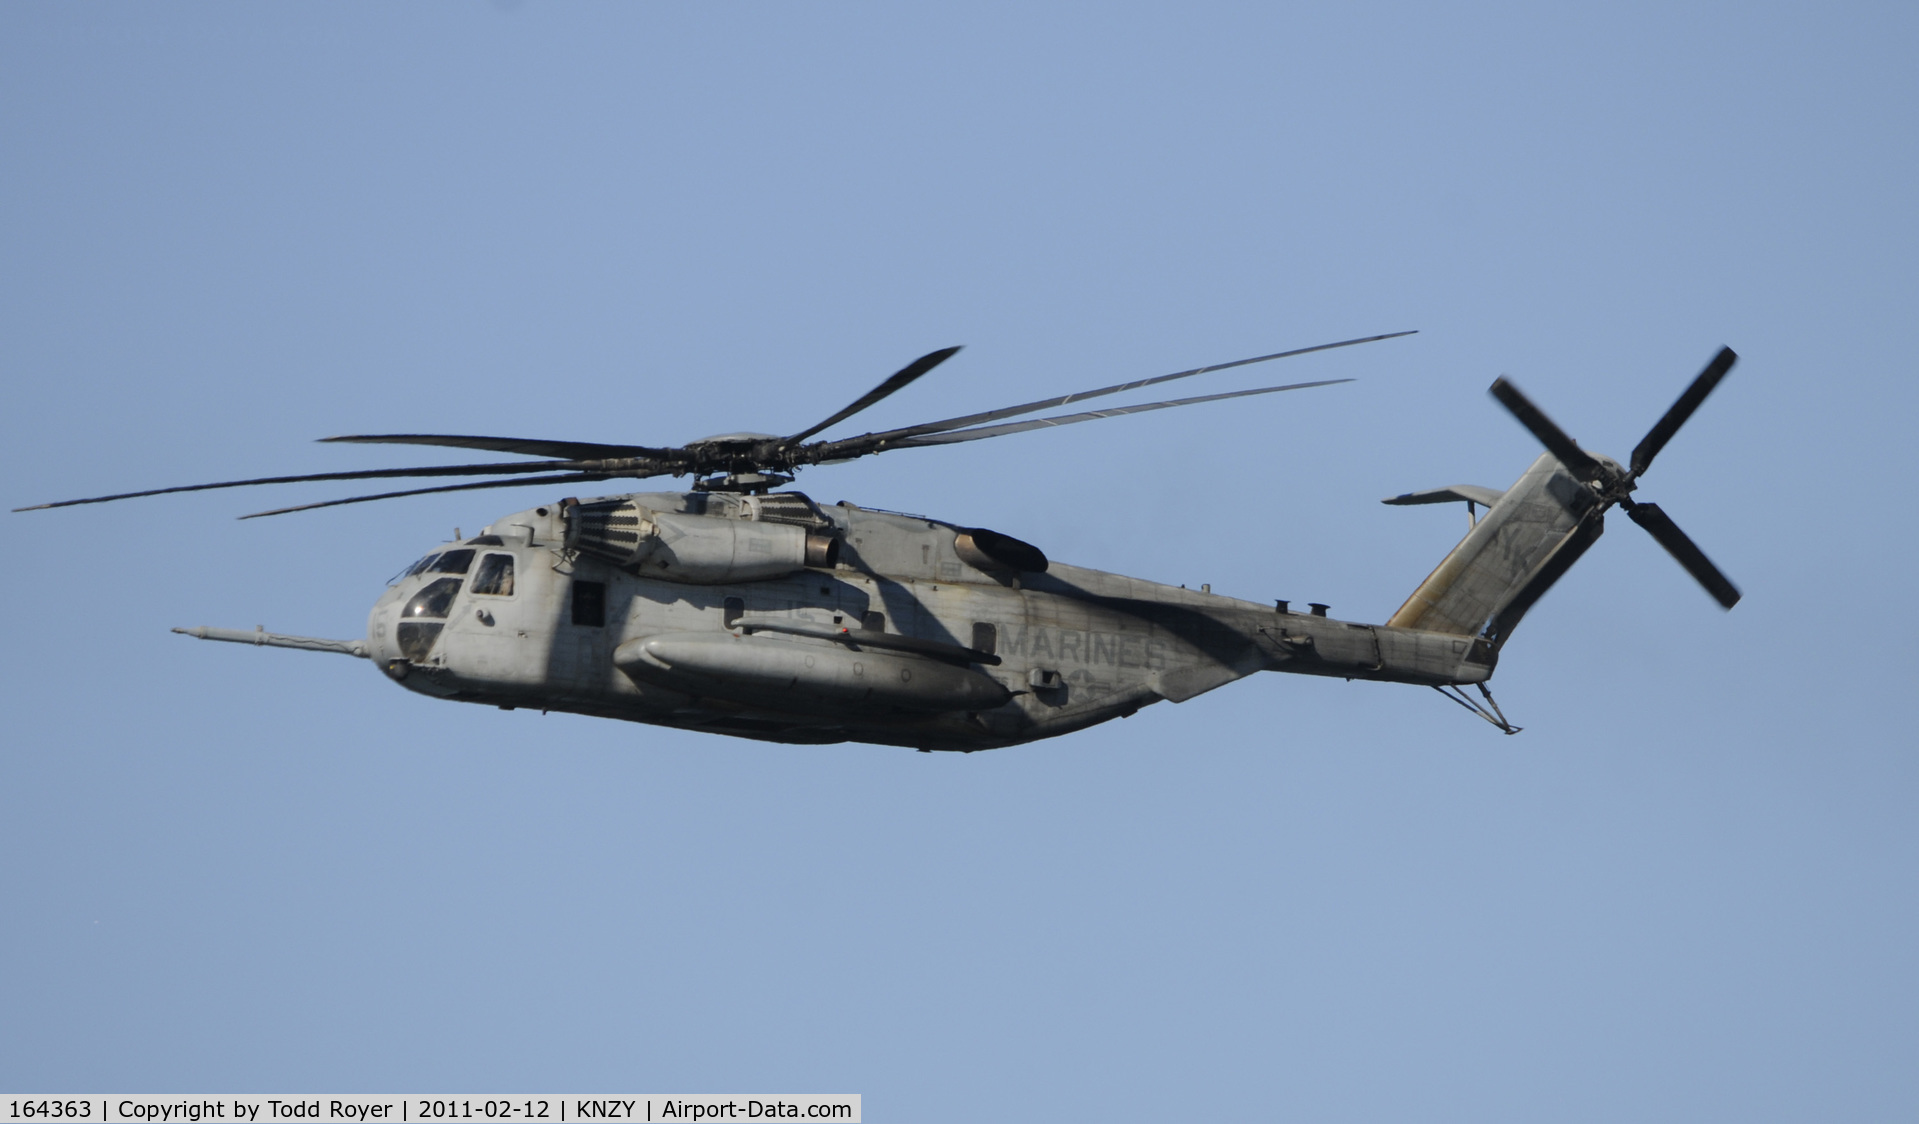 164363, Sikorsky CH-53E Super Stallion C/N 65-592, Centennial of Naval Aviation